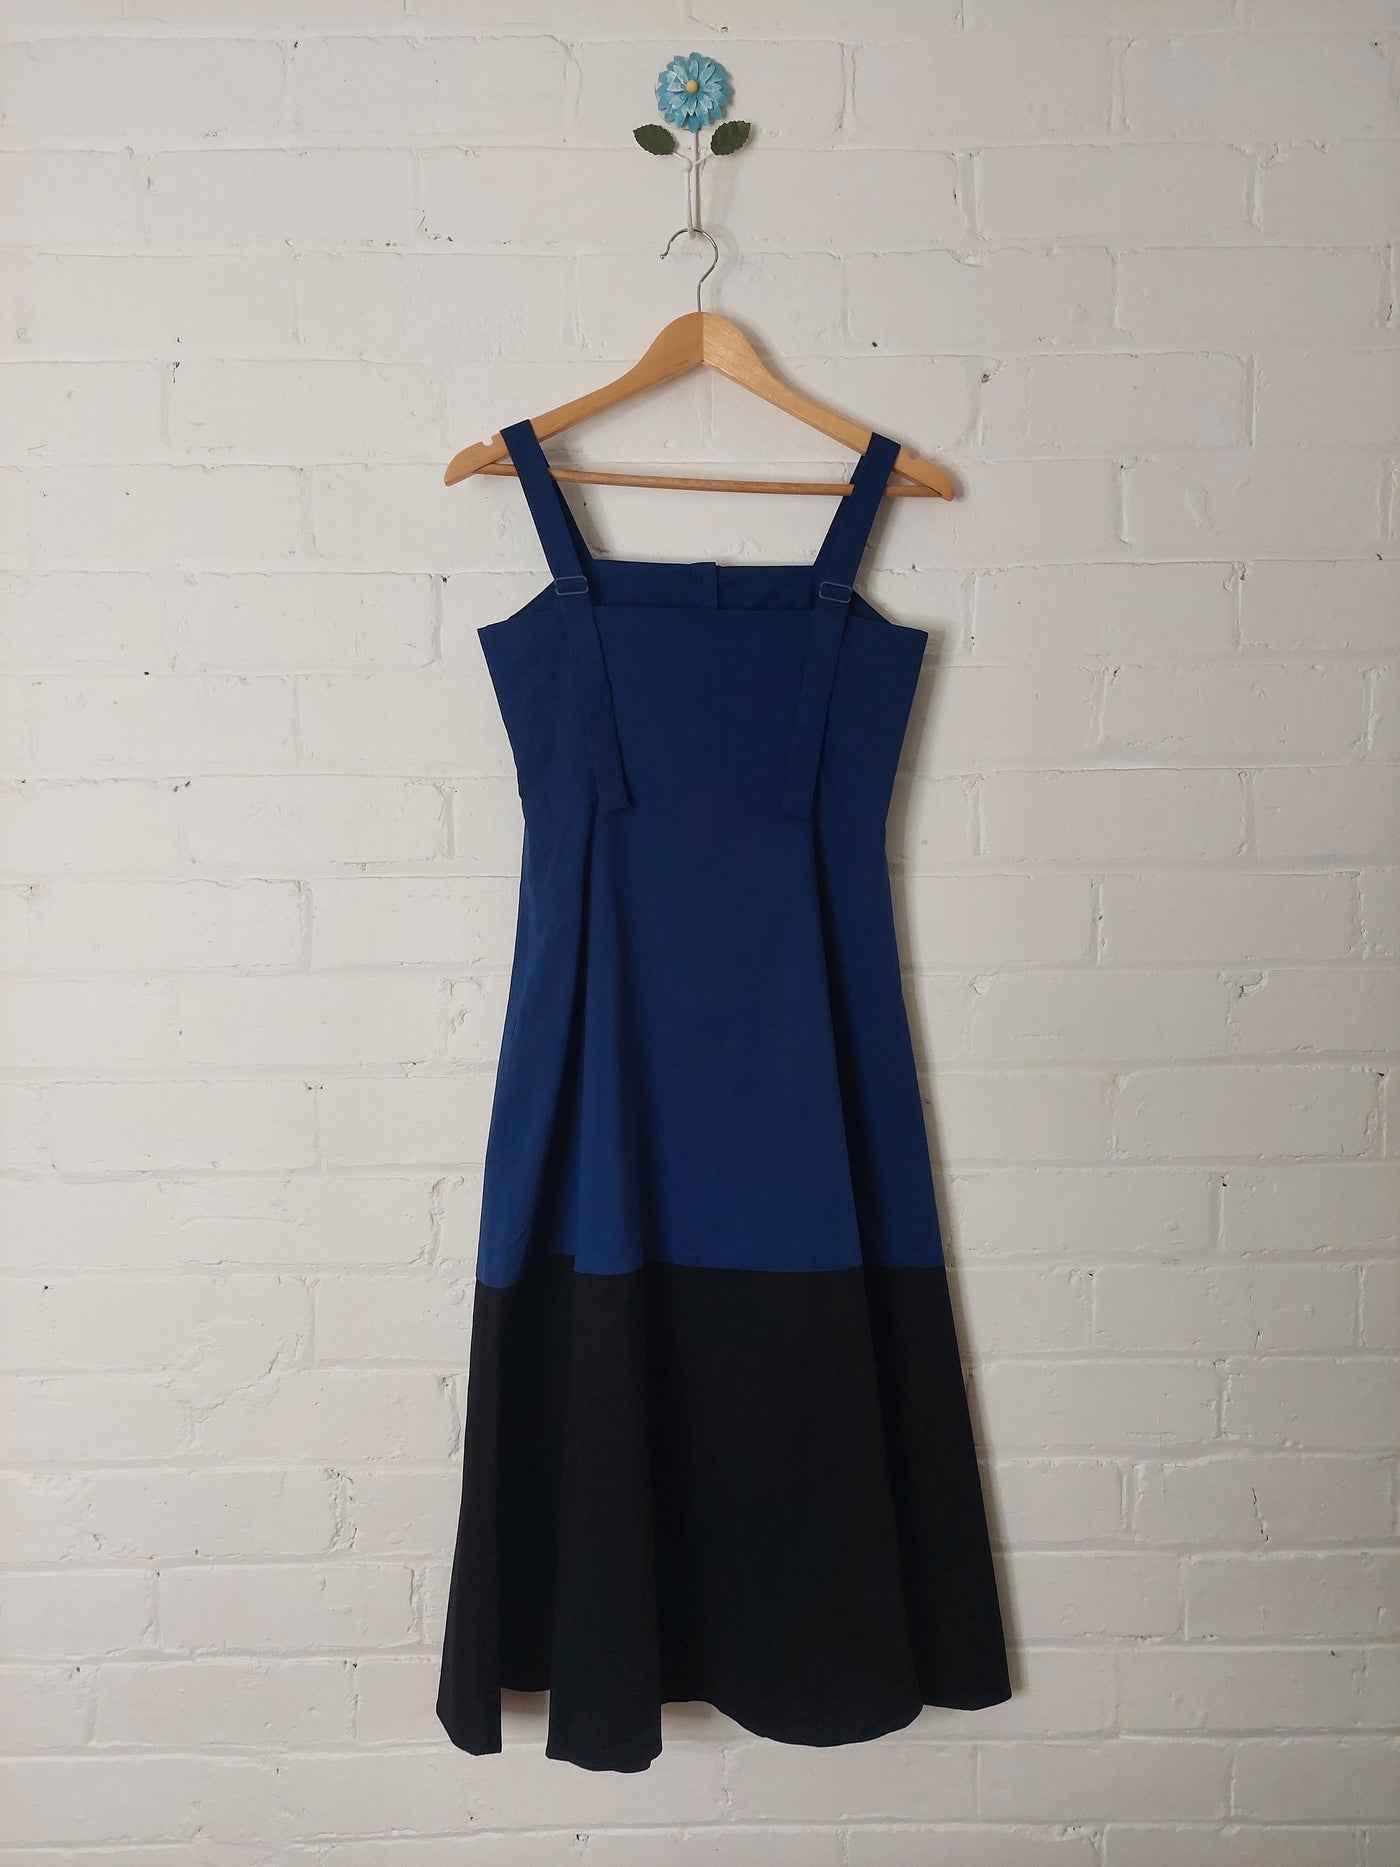 Staud BNWT Dusk Cotton Midi Dress in Twilight Blue, US Size 8 (AU 12)